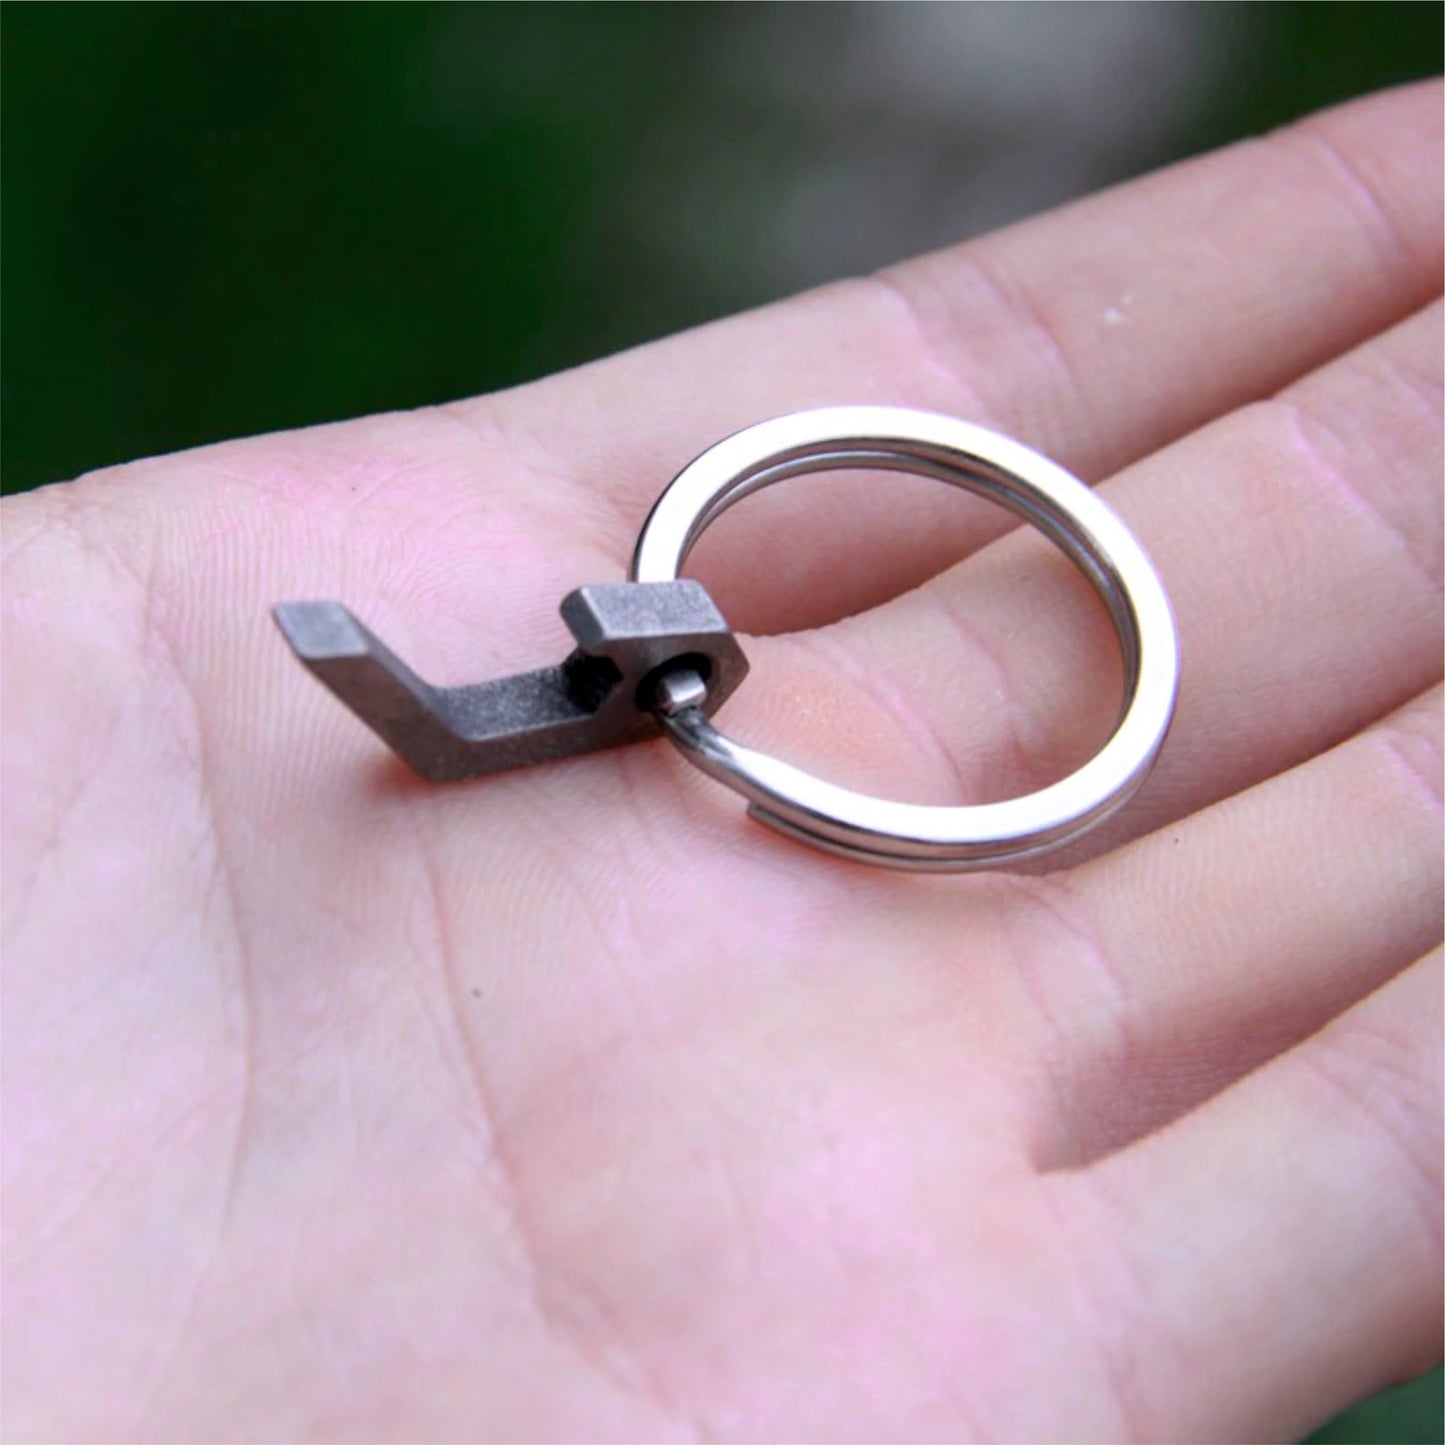 EDC Mini Micro Bottle Opener key ring Survival Emergency Camping Hiking Travel